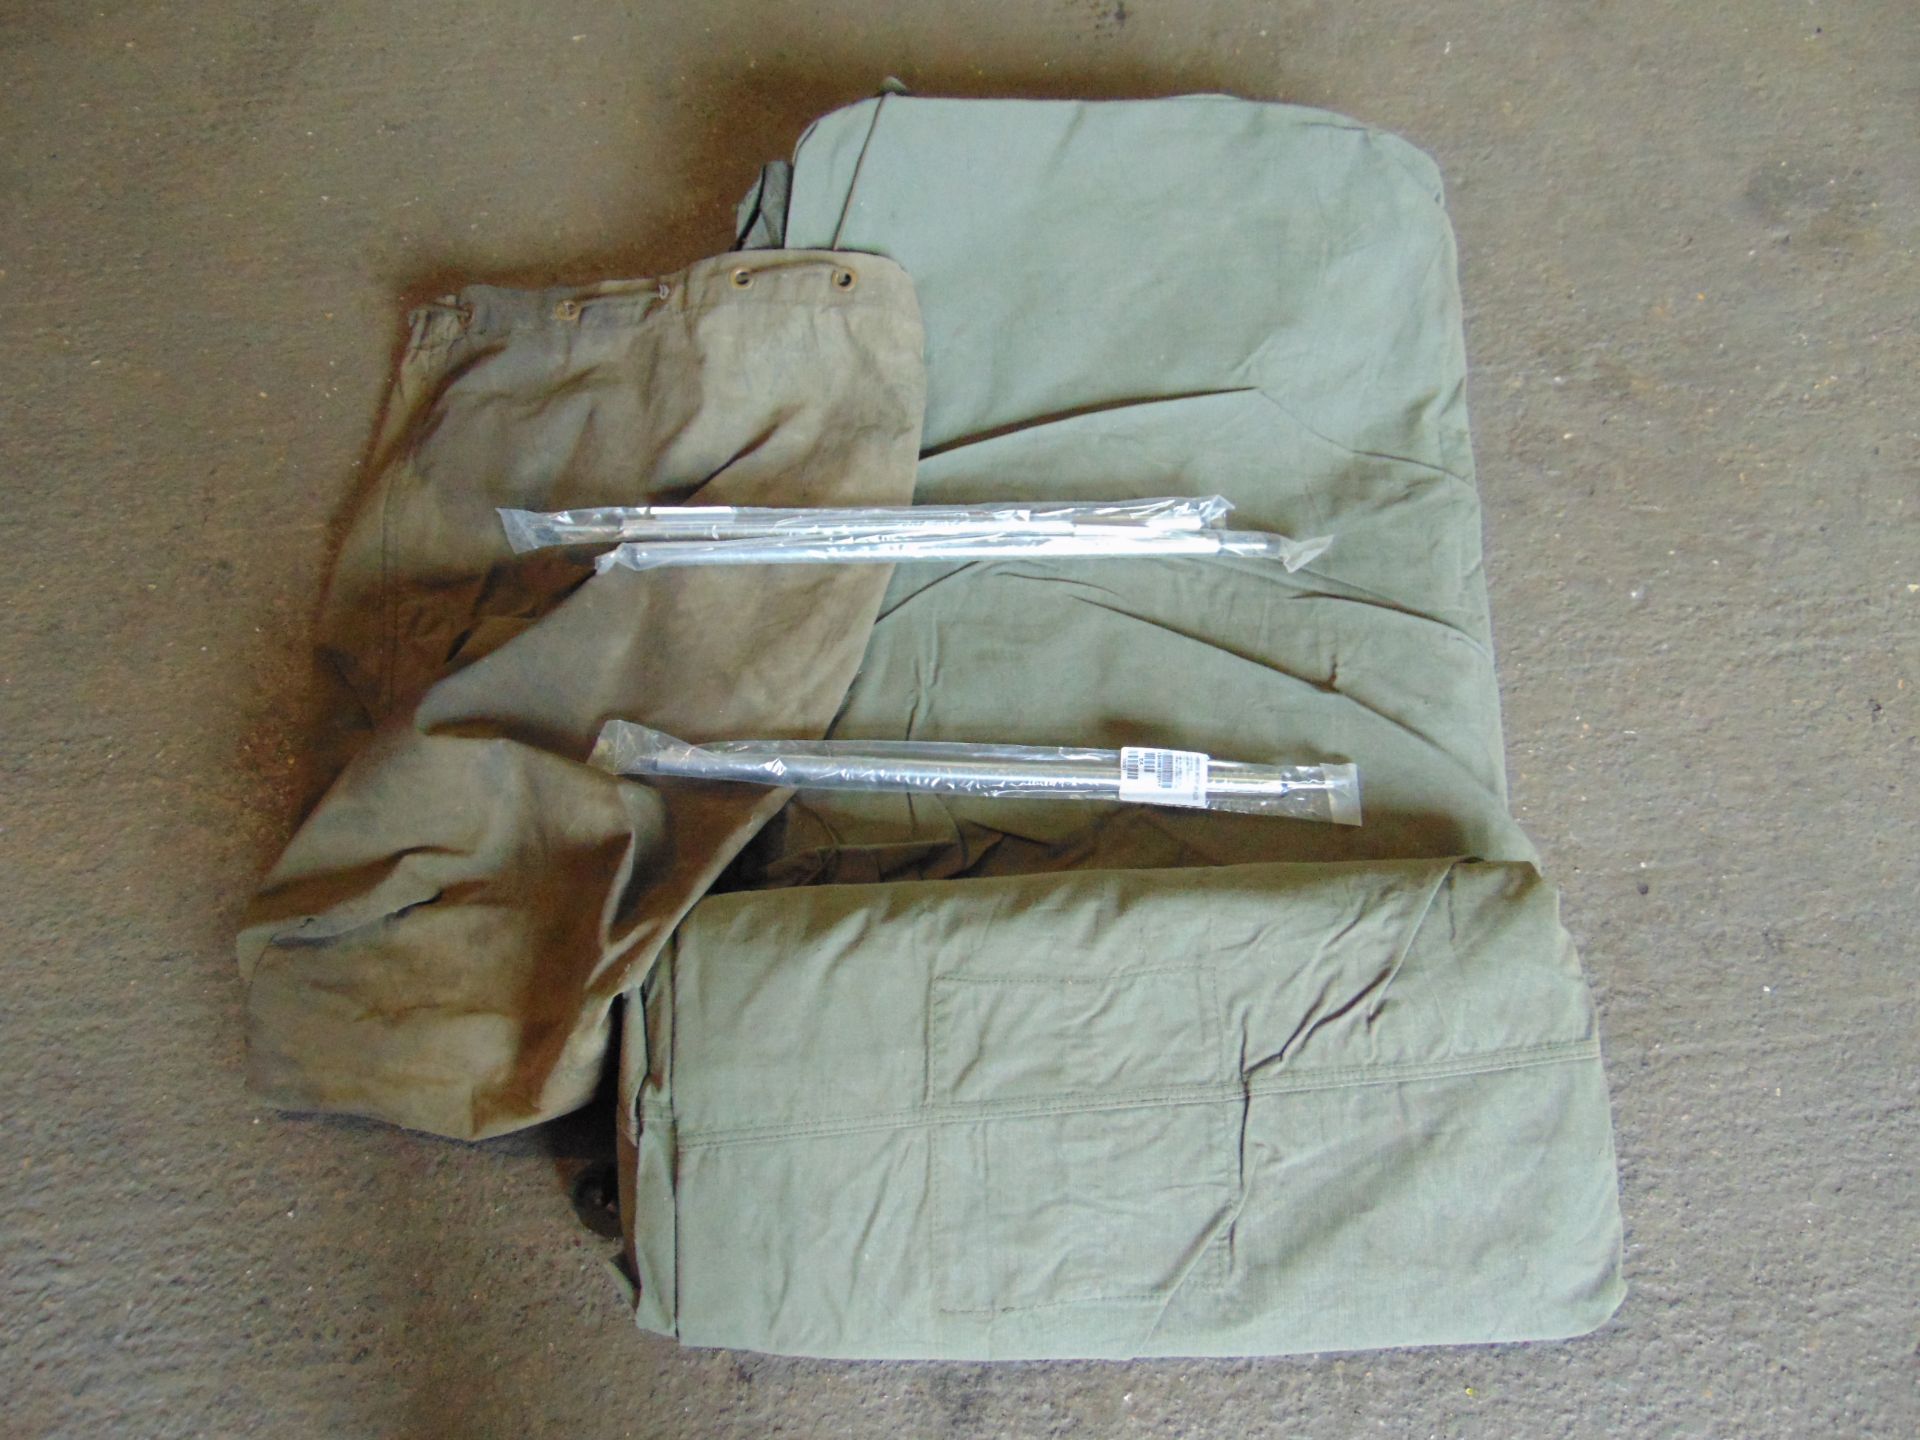 1 x CVRT Side Tent c/w/ Poles in Bag - Image 2 of 2